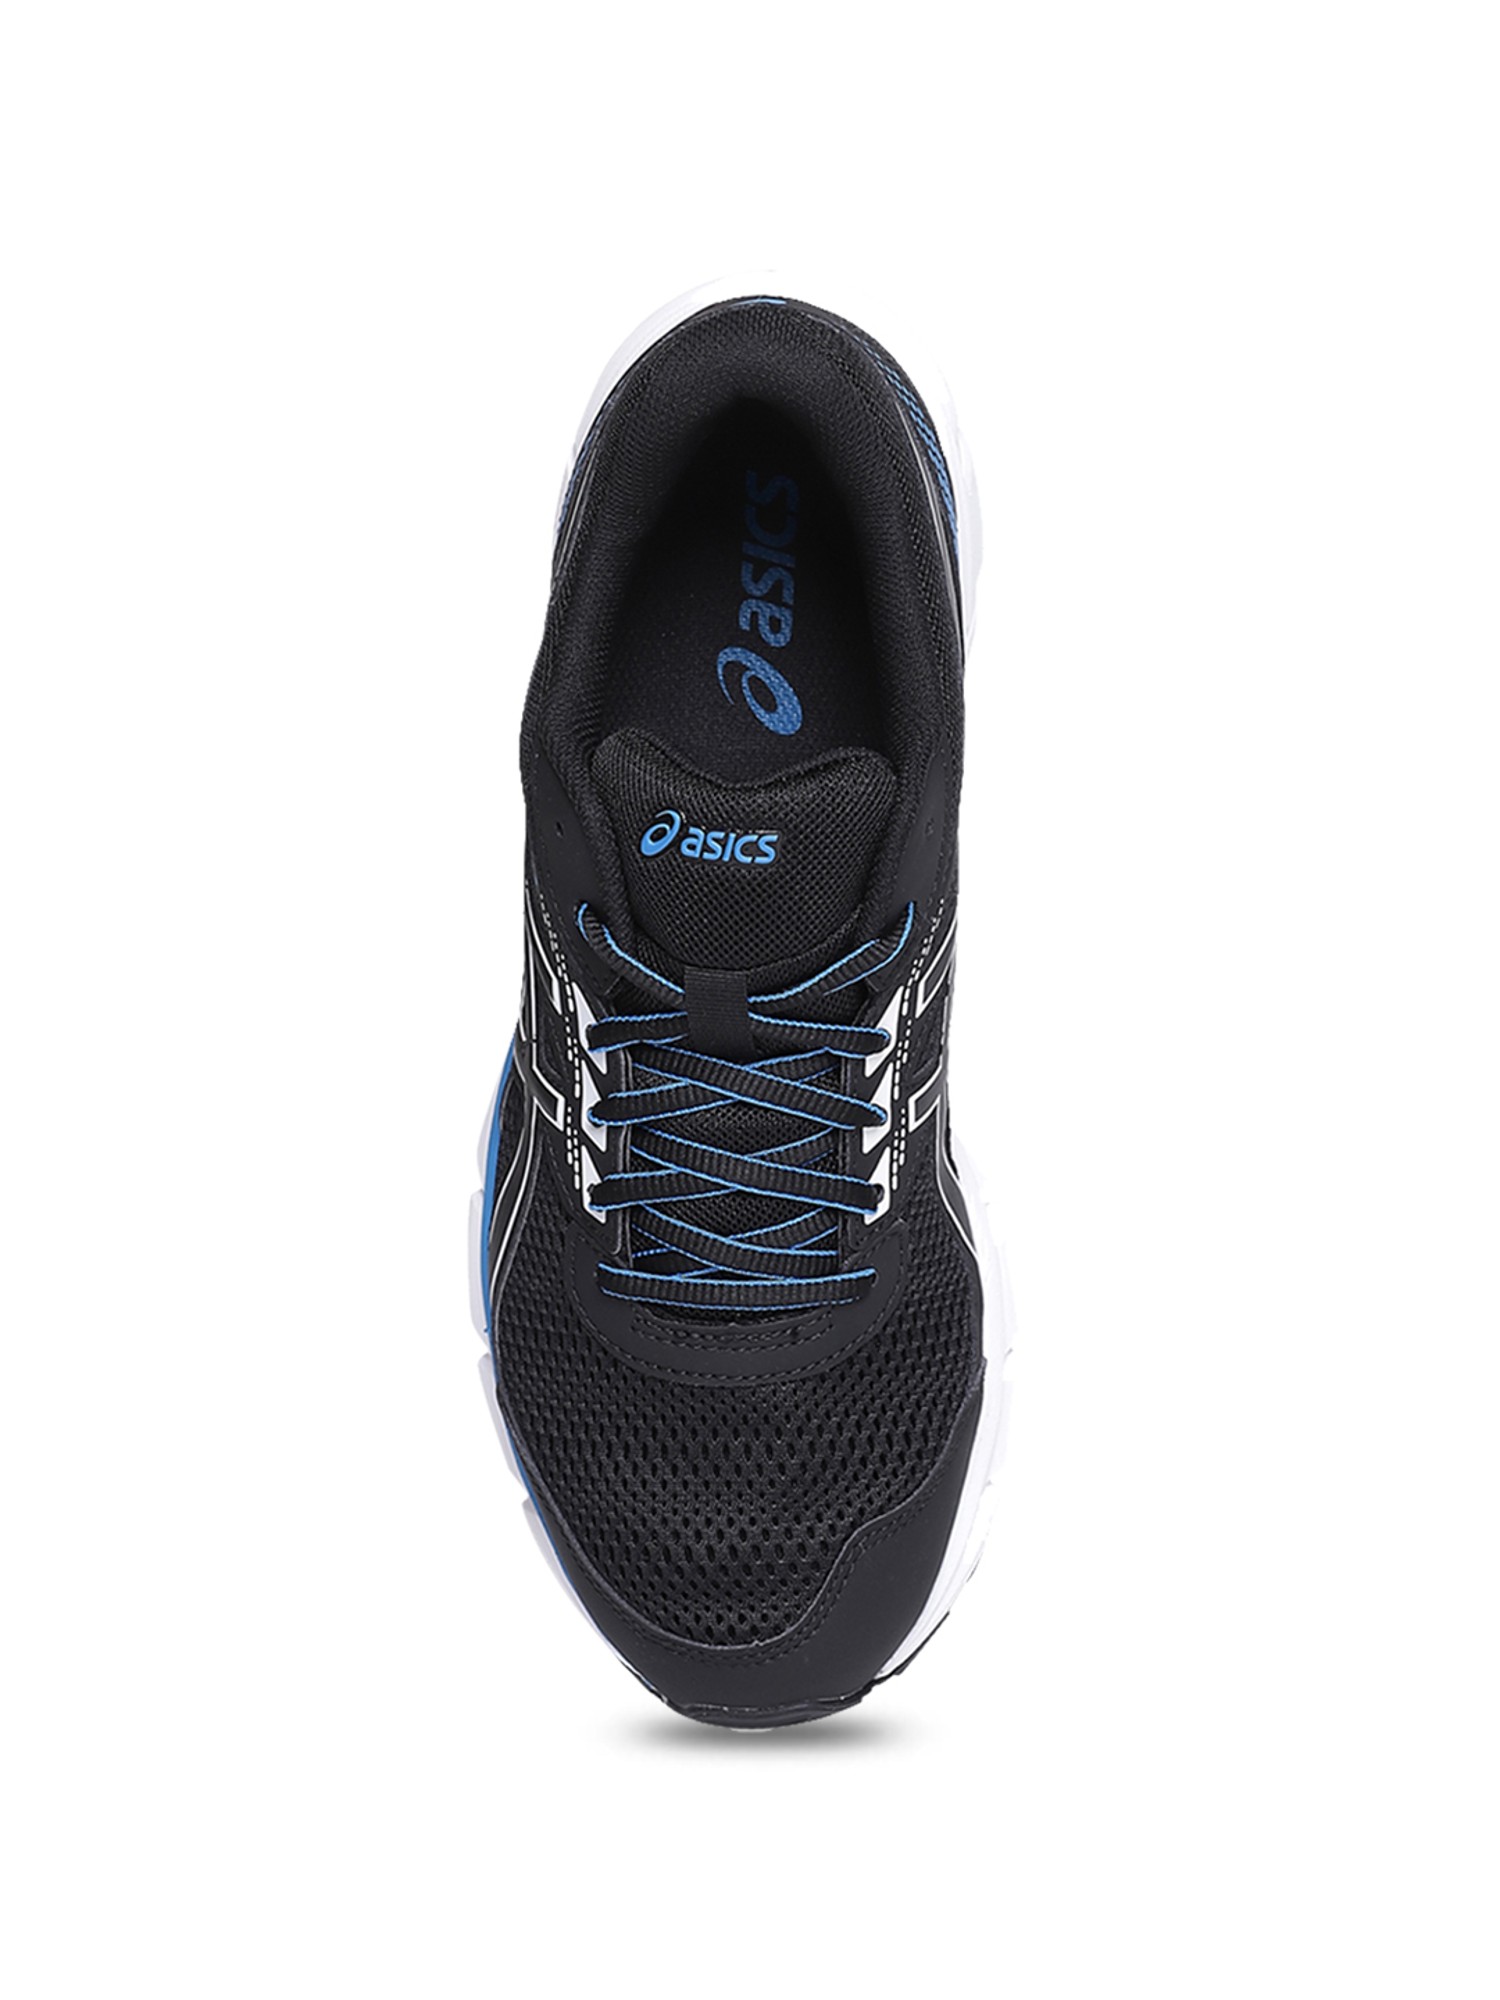 Buy Asics Men's GEL Windhawk 3 Running Shoes for Men at Best Price CLiQ